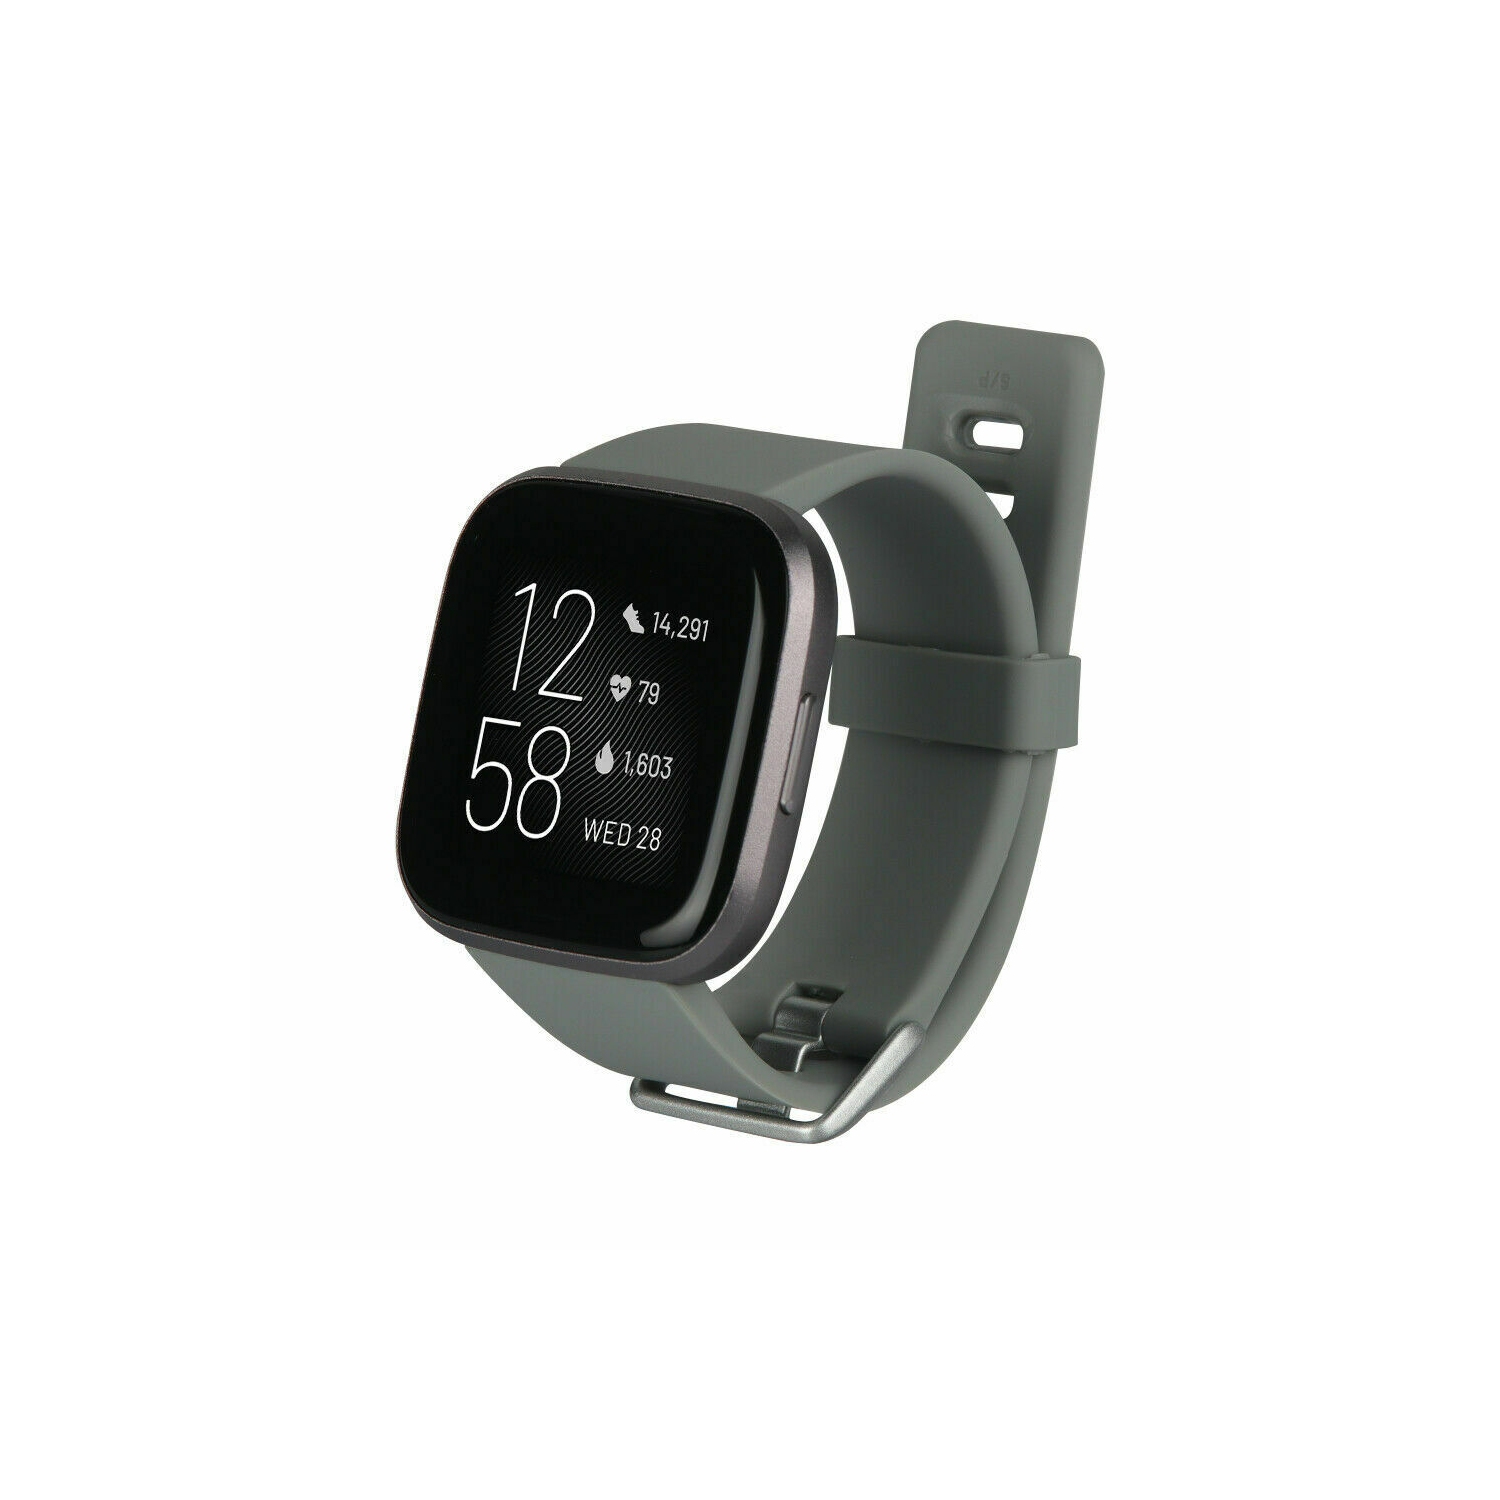 Fitbit Versa 2 Bluetooth Smartwatch Activity Tracker Health & Fitness Sleep & Swim Tracking - Gray (Refurbished)